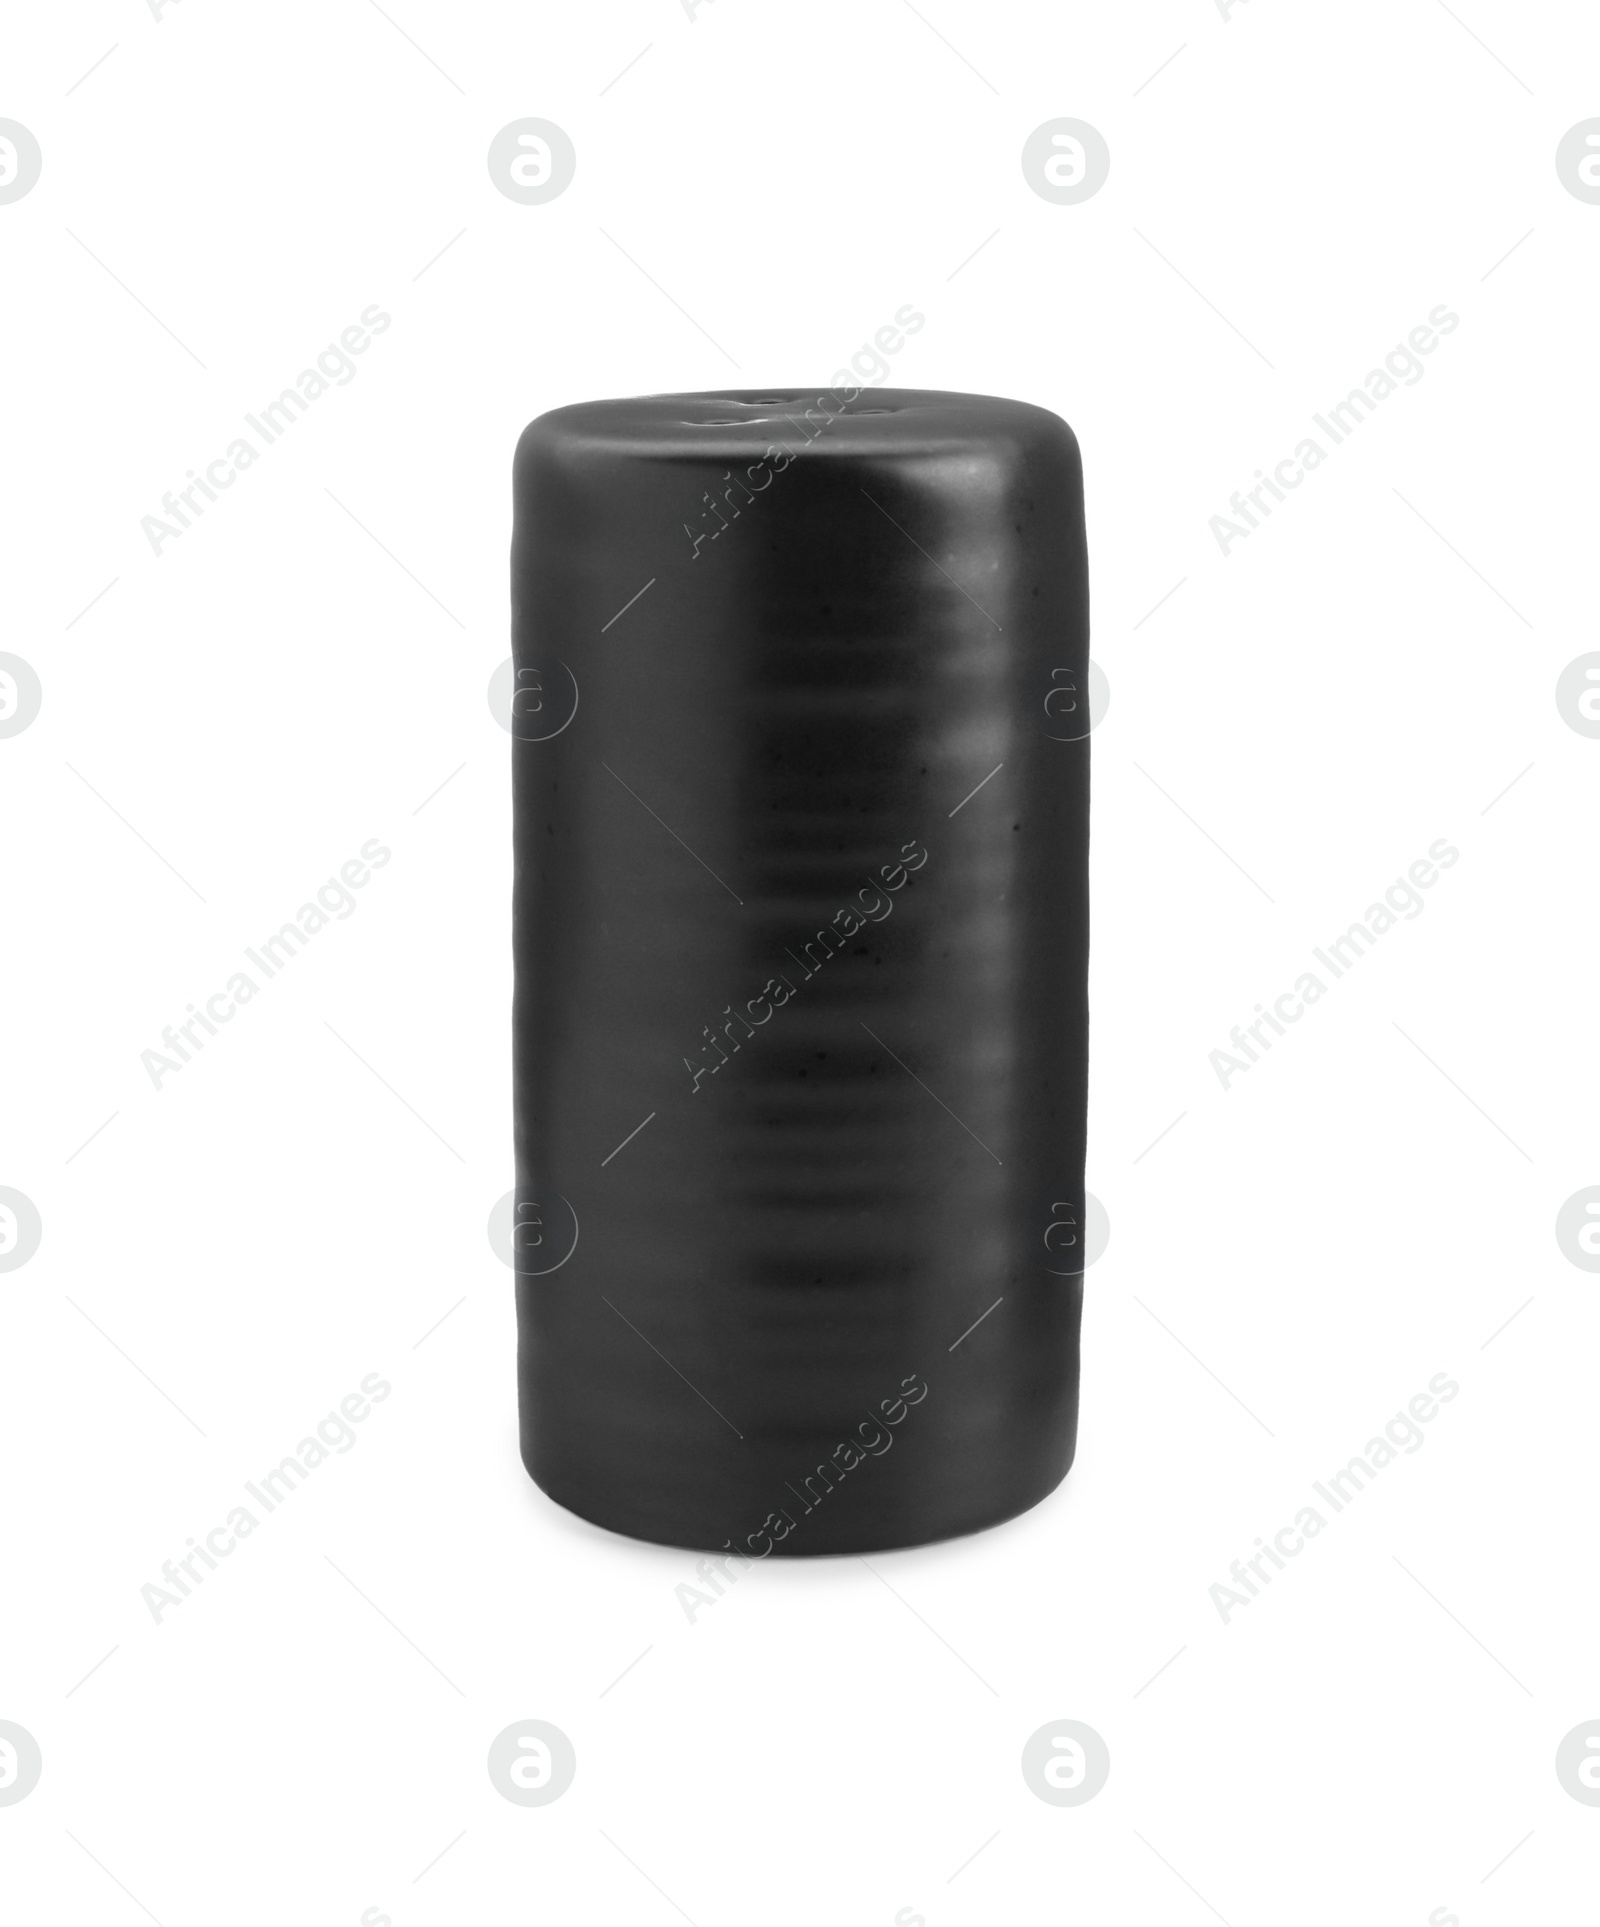 Photo of One black spice shaker isolated on white